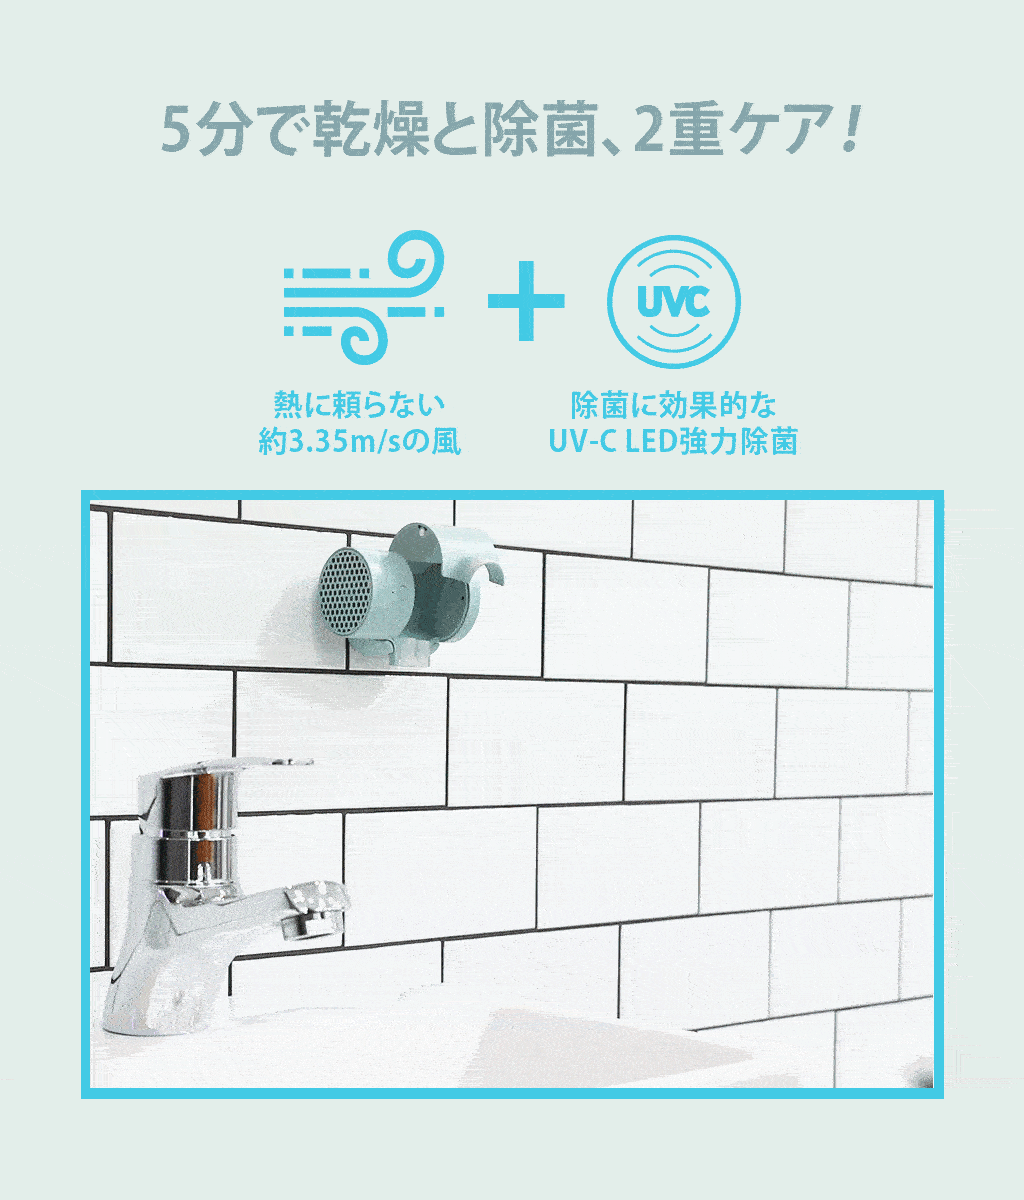 CLEAND 歯ブラシ UV除菌 乾燥器 T-dryer 【 UV除菌器 / コードレス/ USB Type-C 充電式 / 壁掛け可能